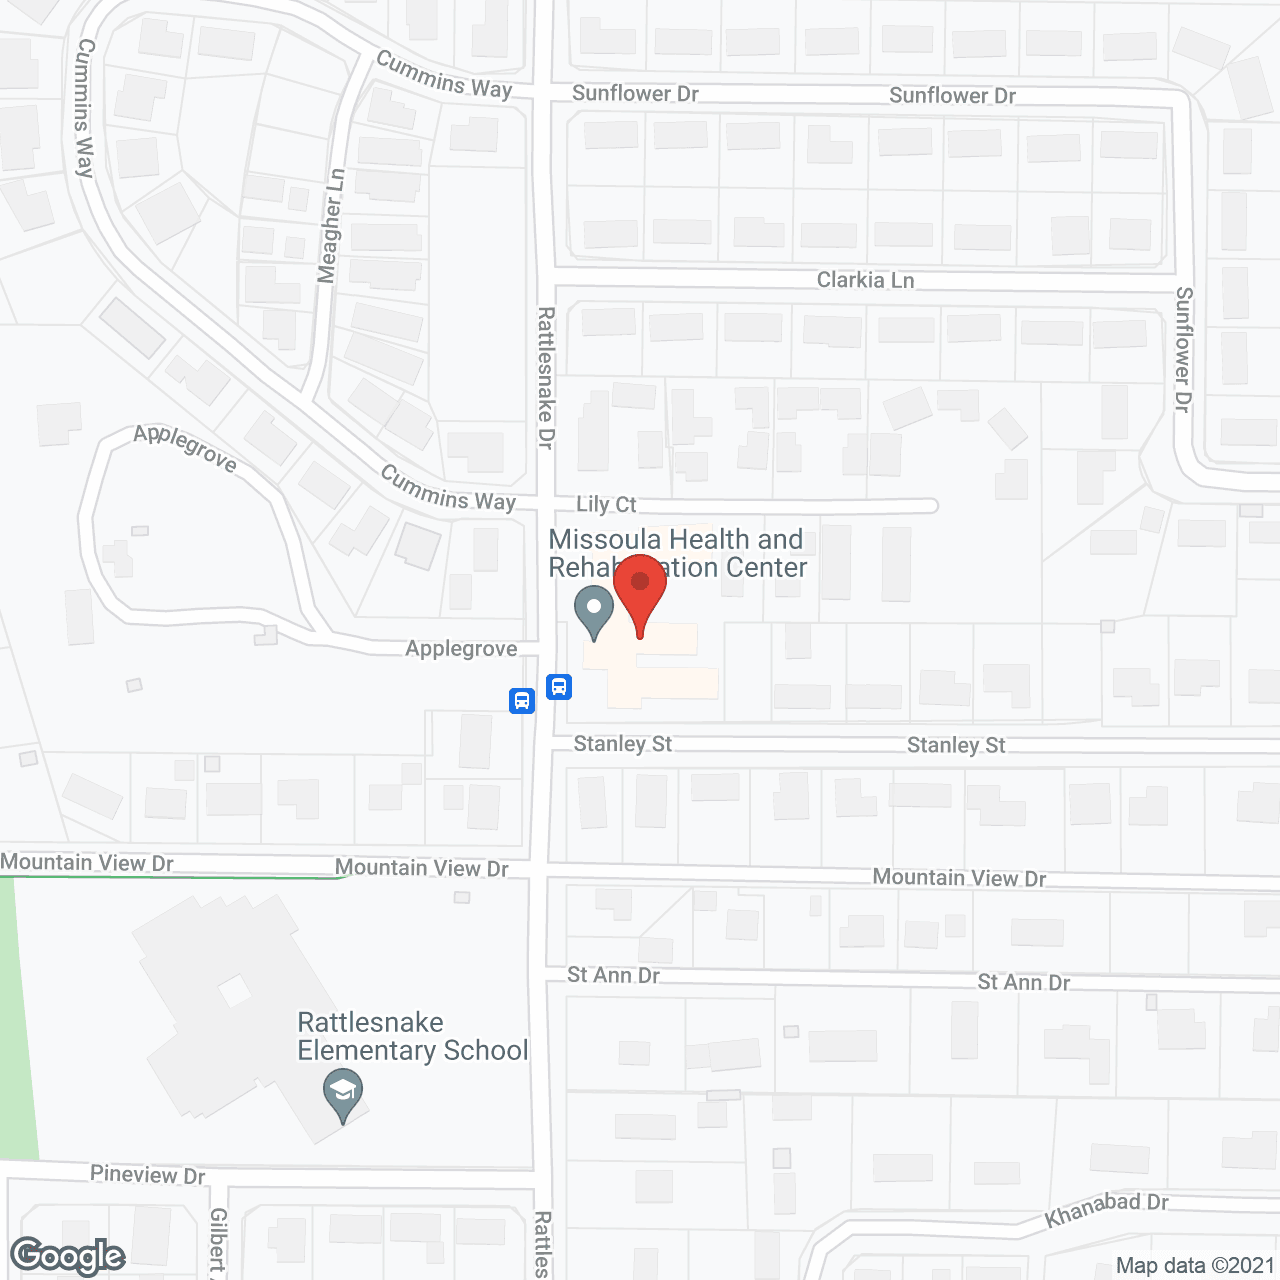 Missoula Health and Rehabilitation Center in google map